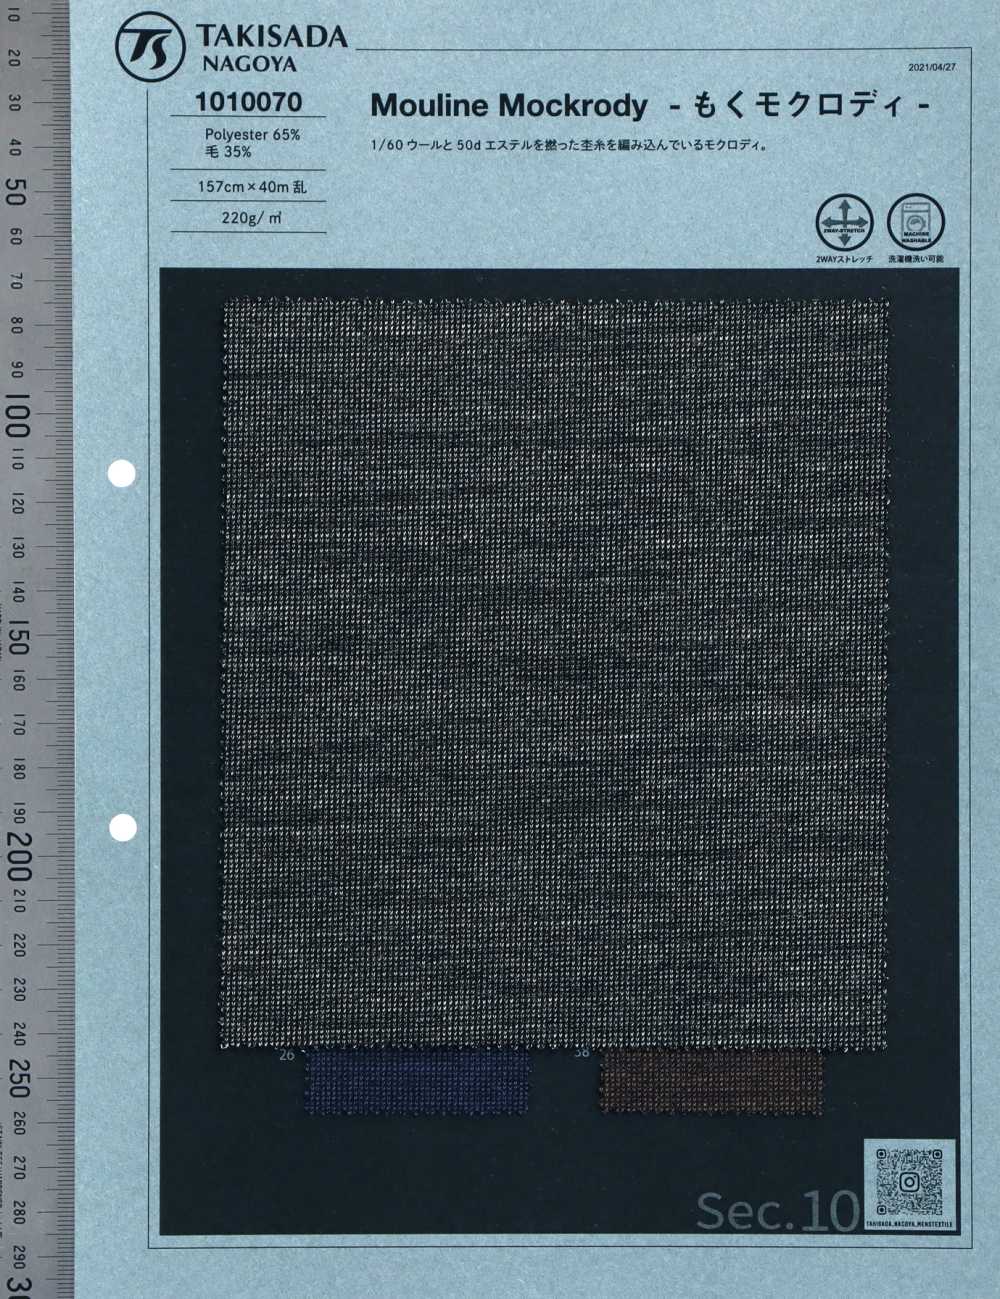 1010070 Laine/Polyester Murinemocrodi[Fabrication De Textile] Takisada Nagoya